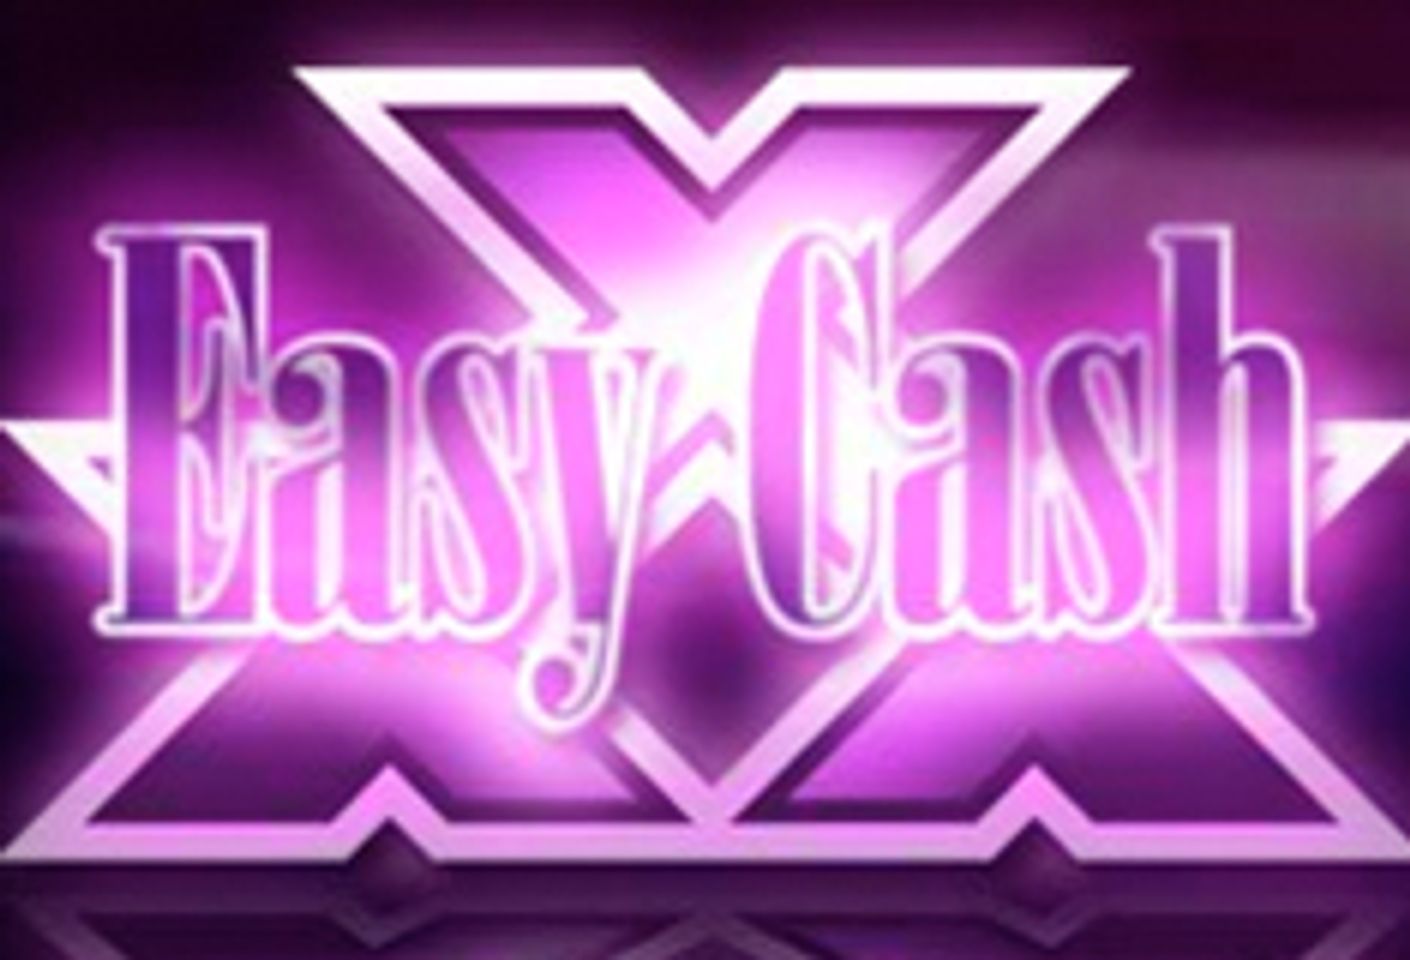 XXXEasyCash Program Launches